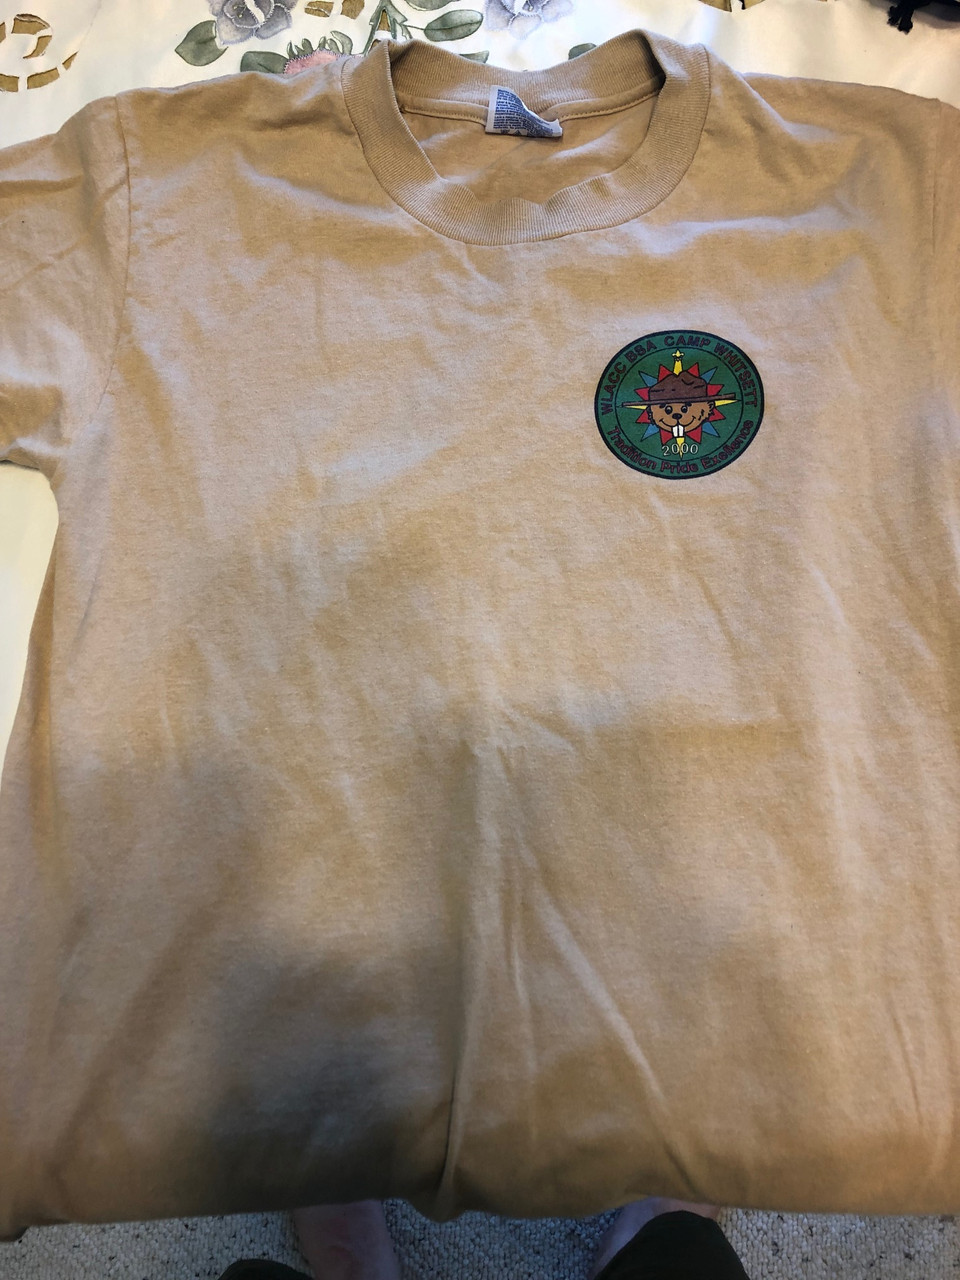 2000 Camp Whitsett Tee Shirt, Mens Small, Lite Use